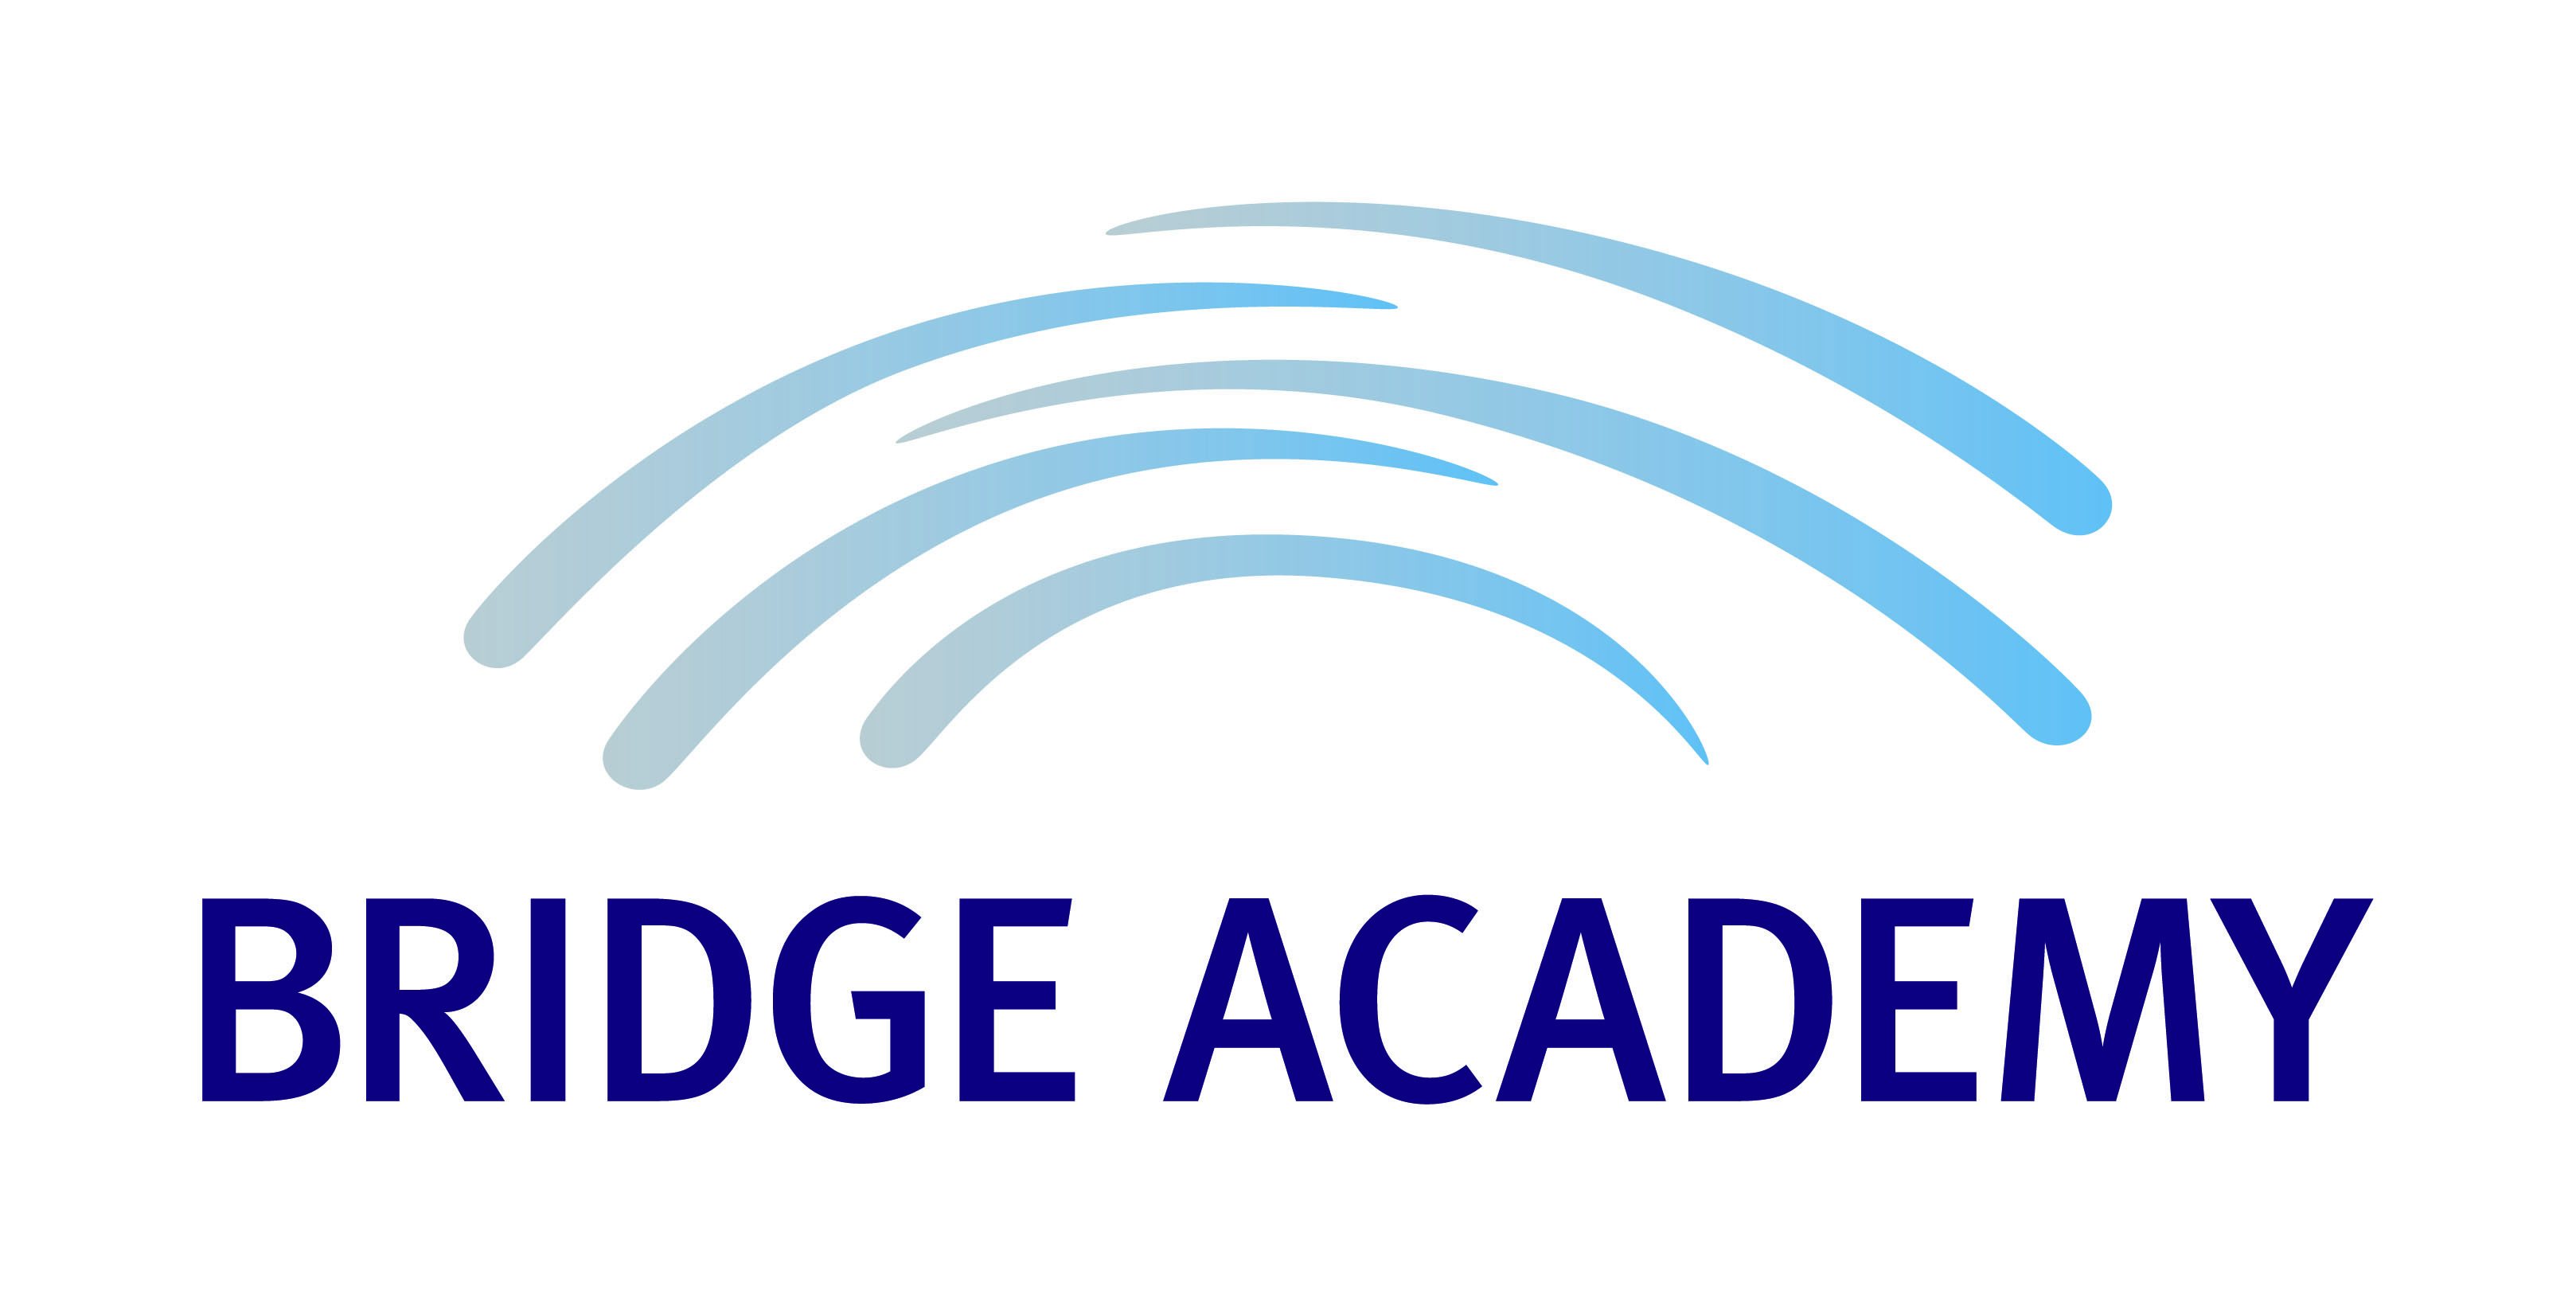 Bridge Academy校徽